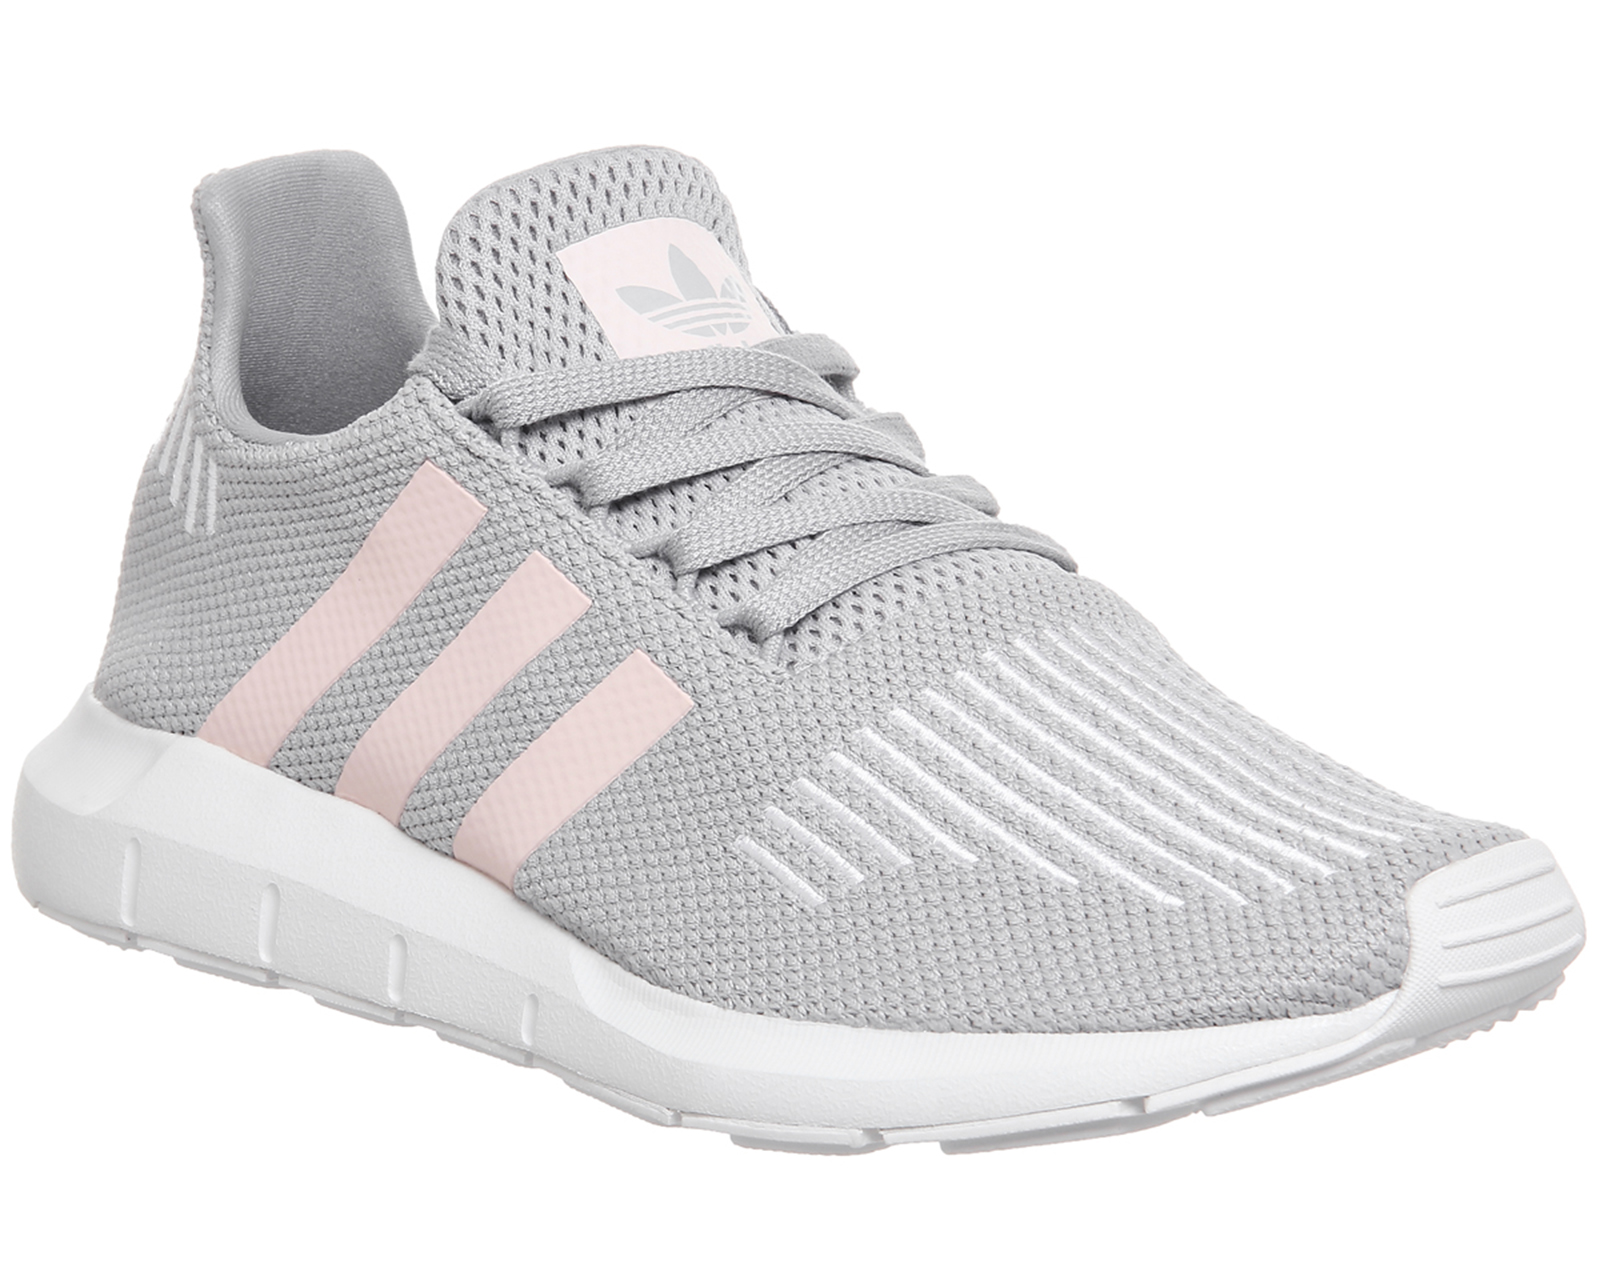 adidas swift run grey and pink